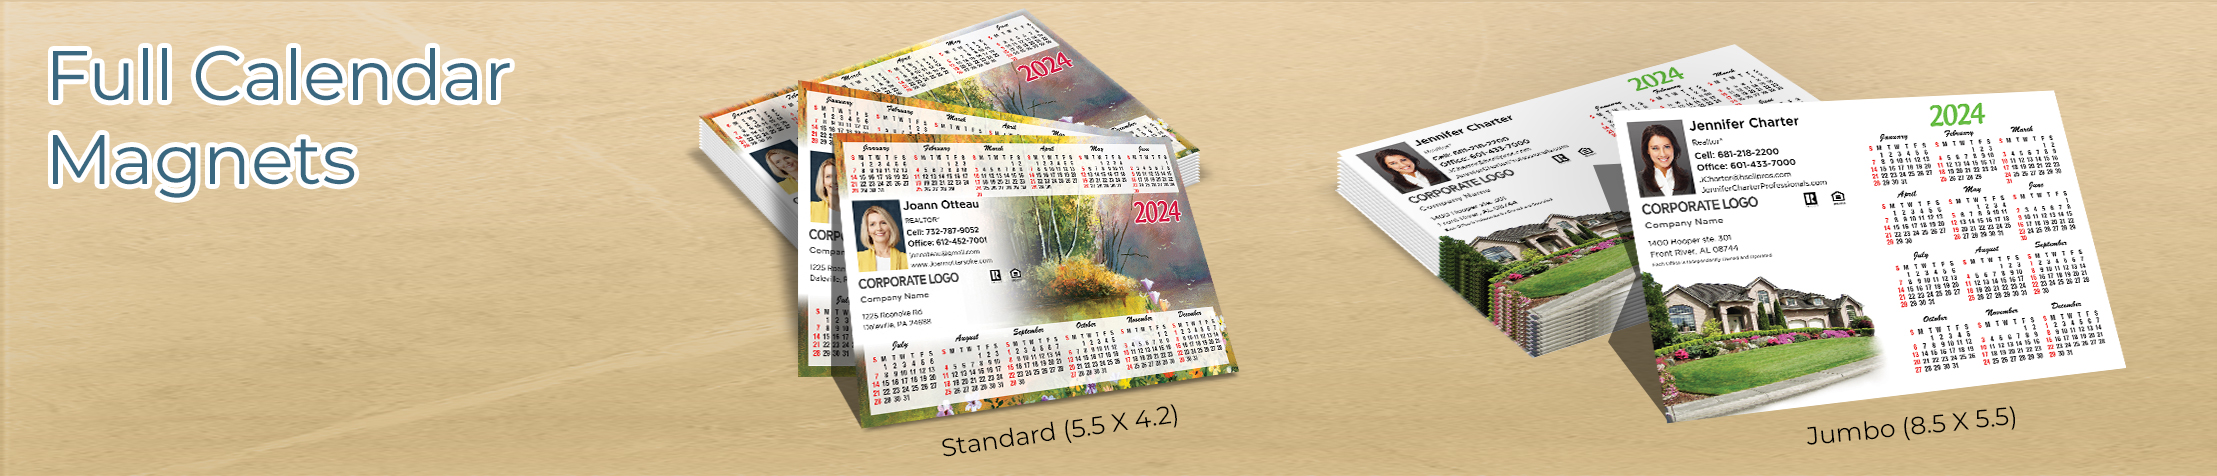 Century 21 Real Estate Full Calendar Magnets - Century 21 2019 calendars in Standard or Jumbo Size | BestPrintBuy.com